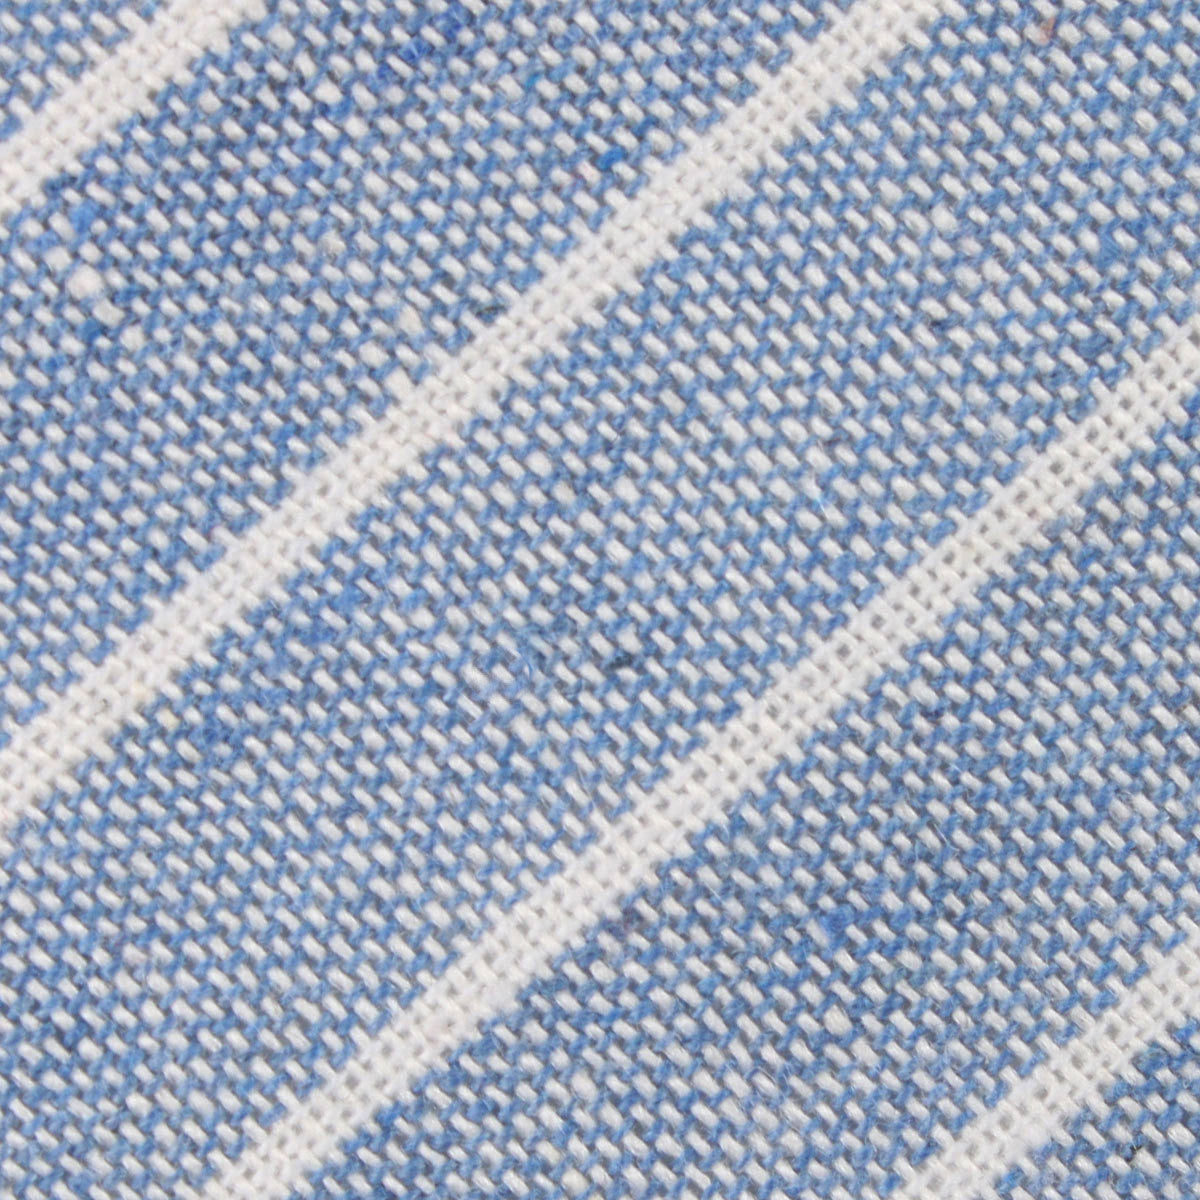 Blue Barney Pin Stripe Linen Fabric Self Bowtie